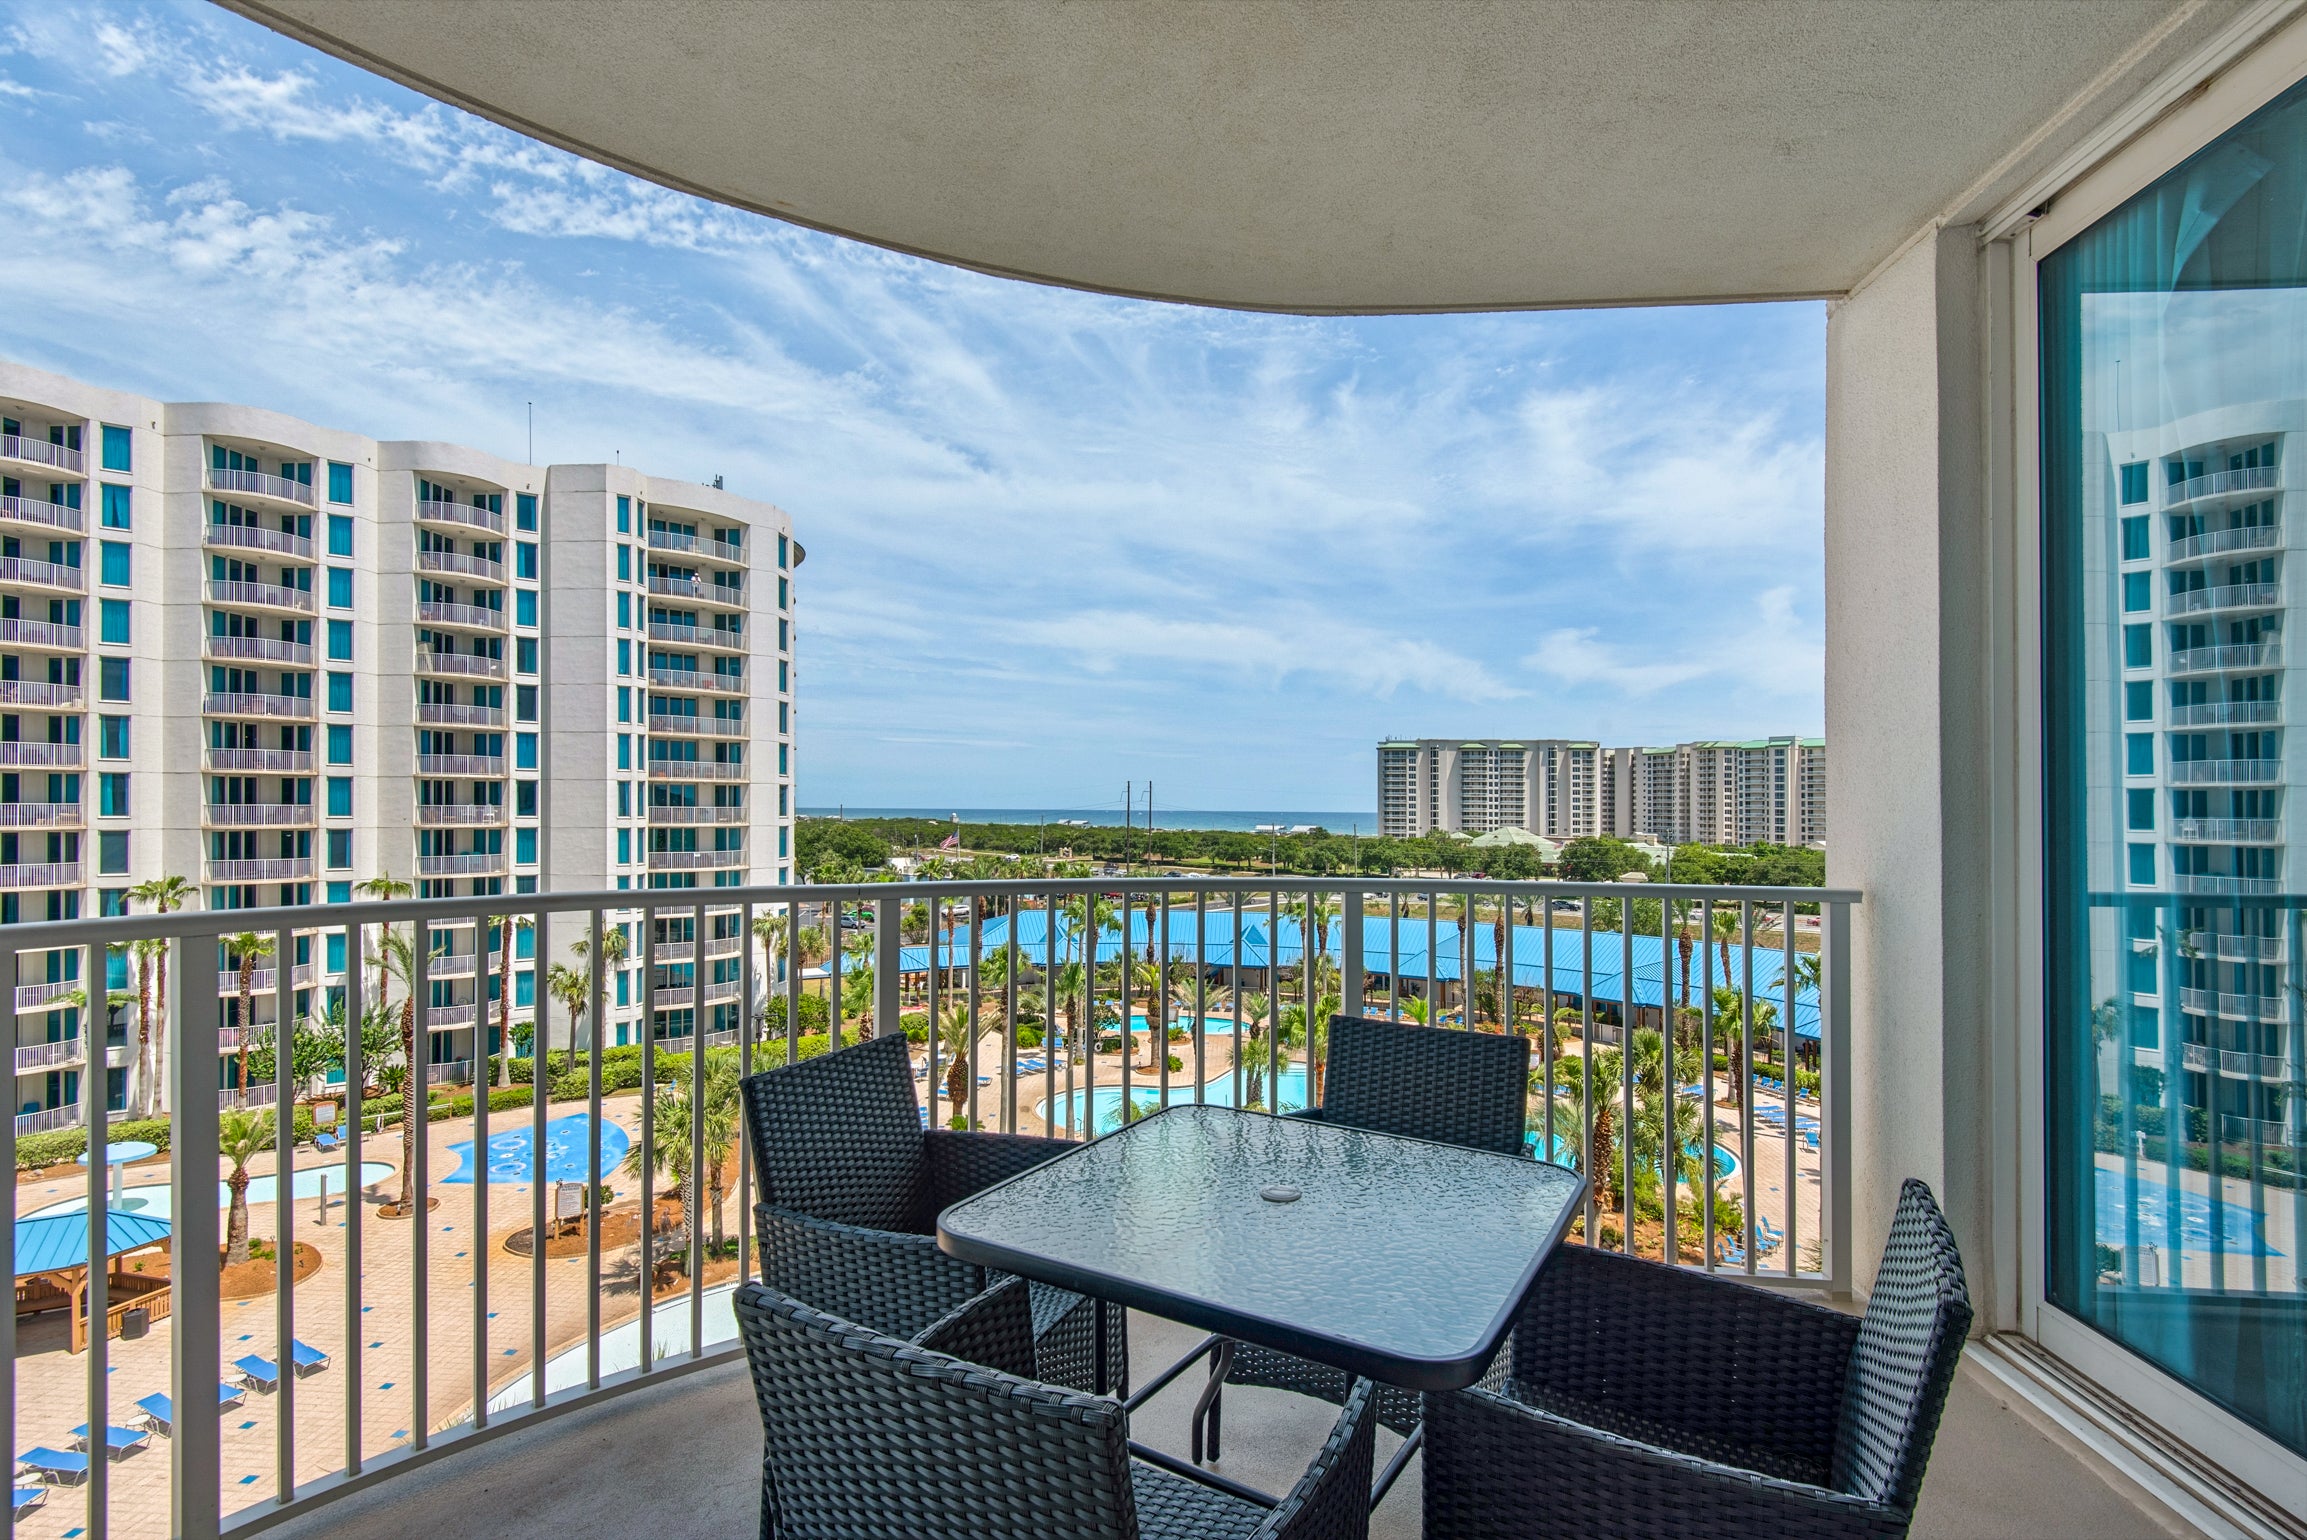 Palms Resort #2611 with balcony views